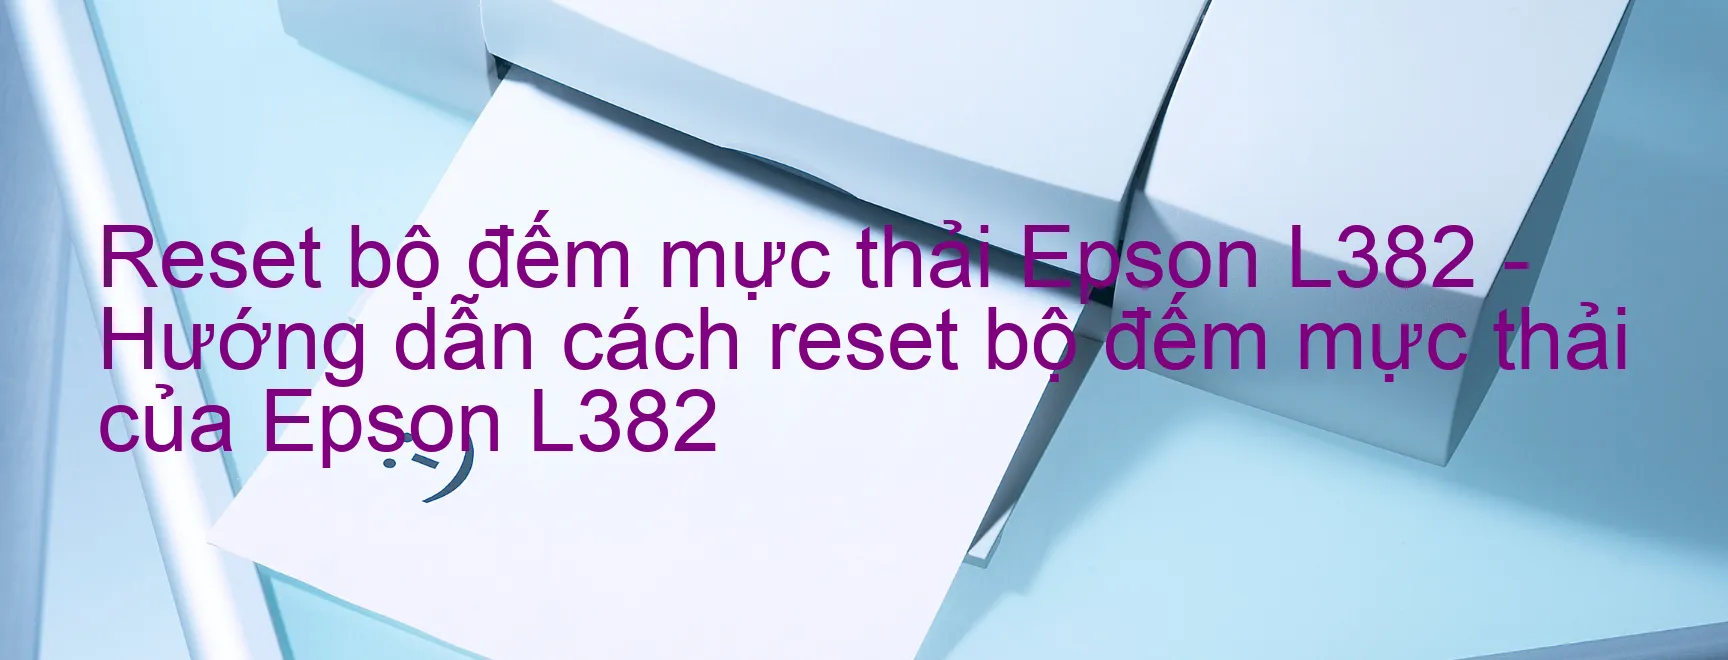 Reset bộ đếm mực thải Epson L382 - Hướng dẫn cách reset bộ đếm mực thải của Epson L382